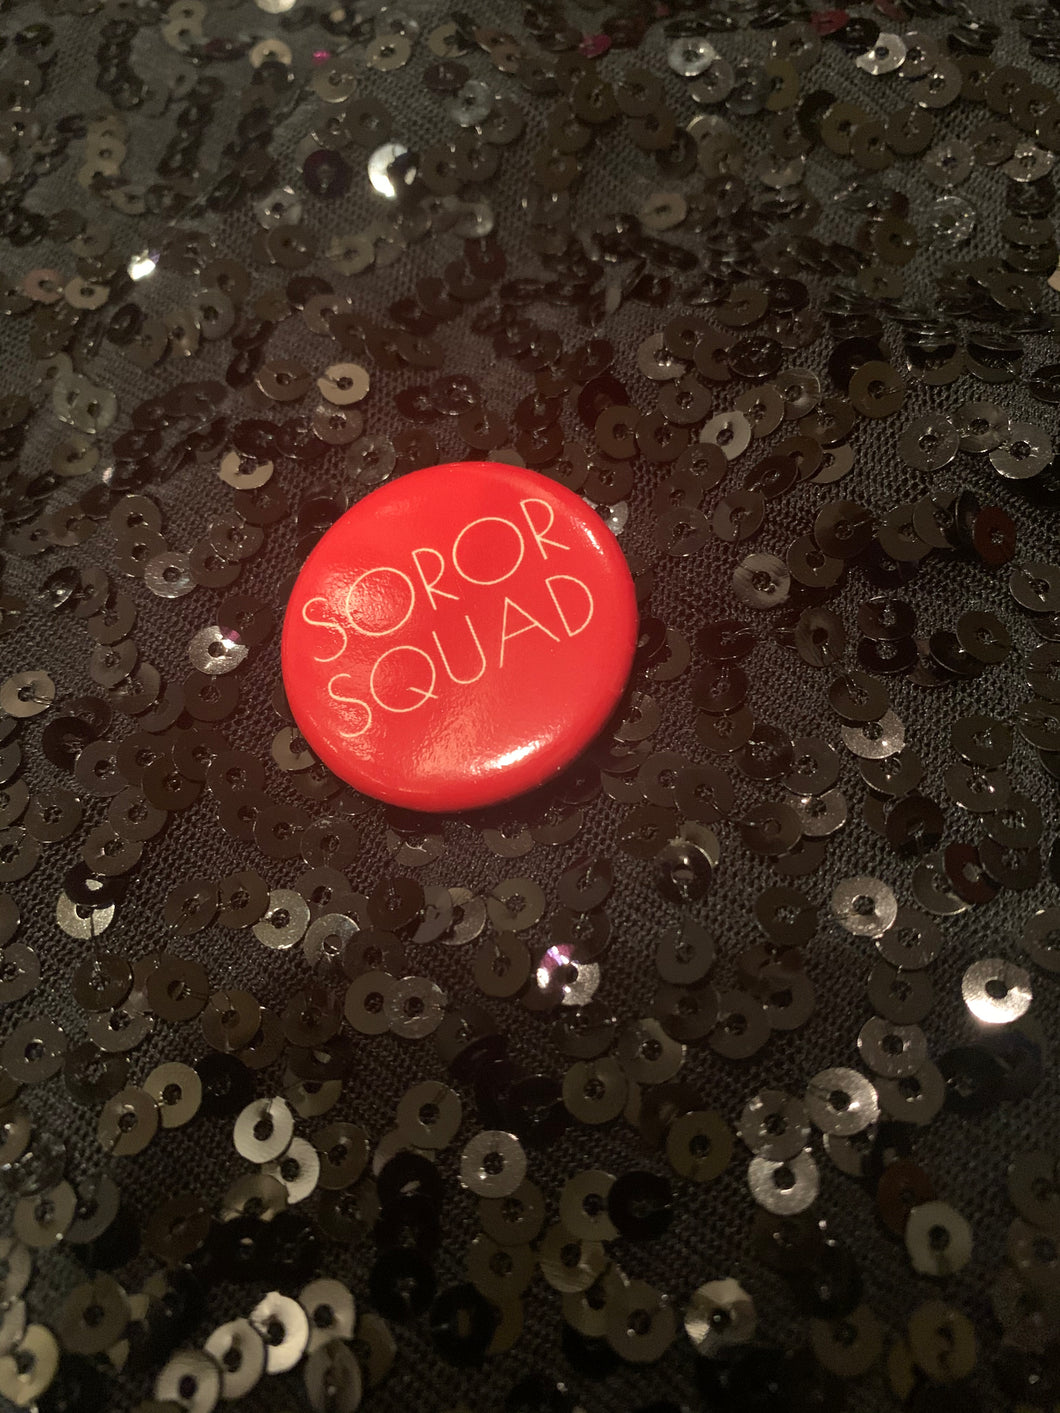 Soror Squad Button Red